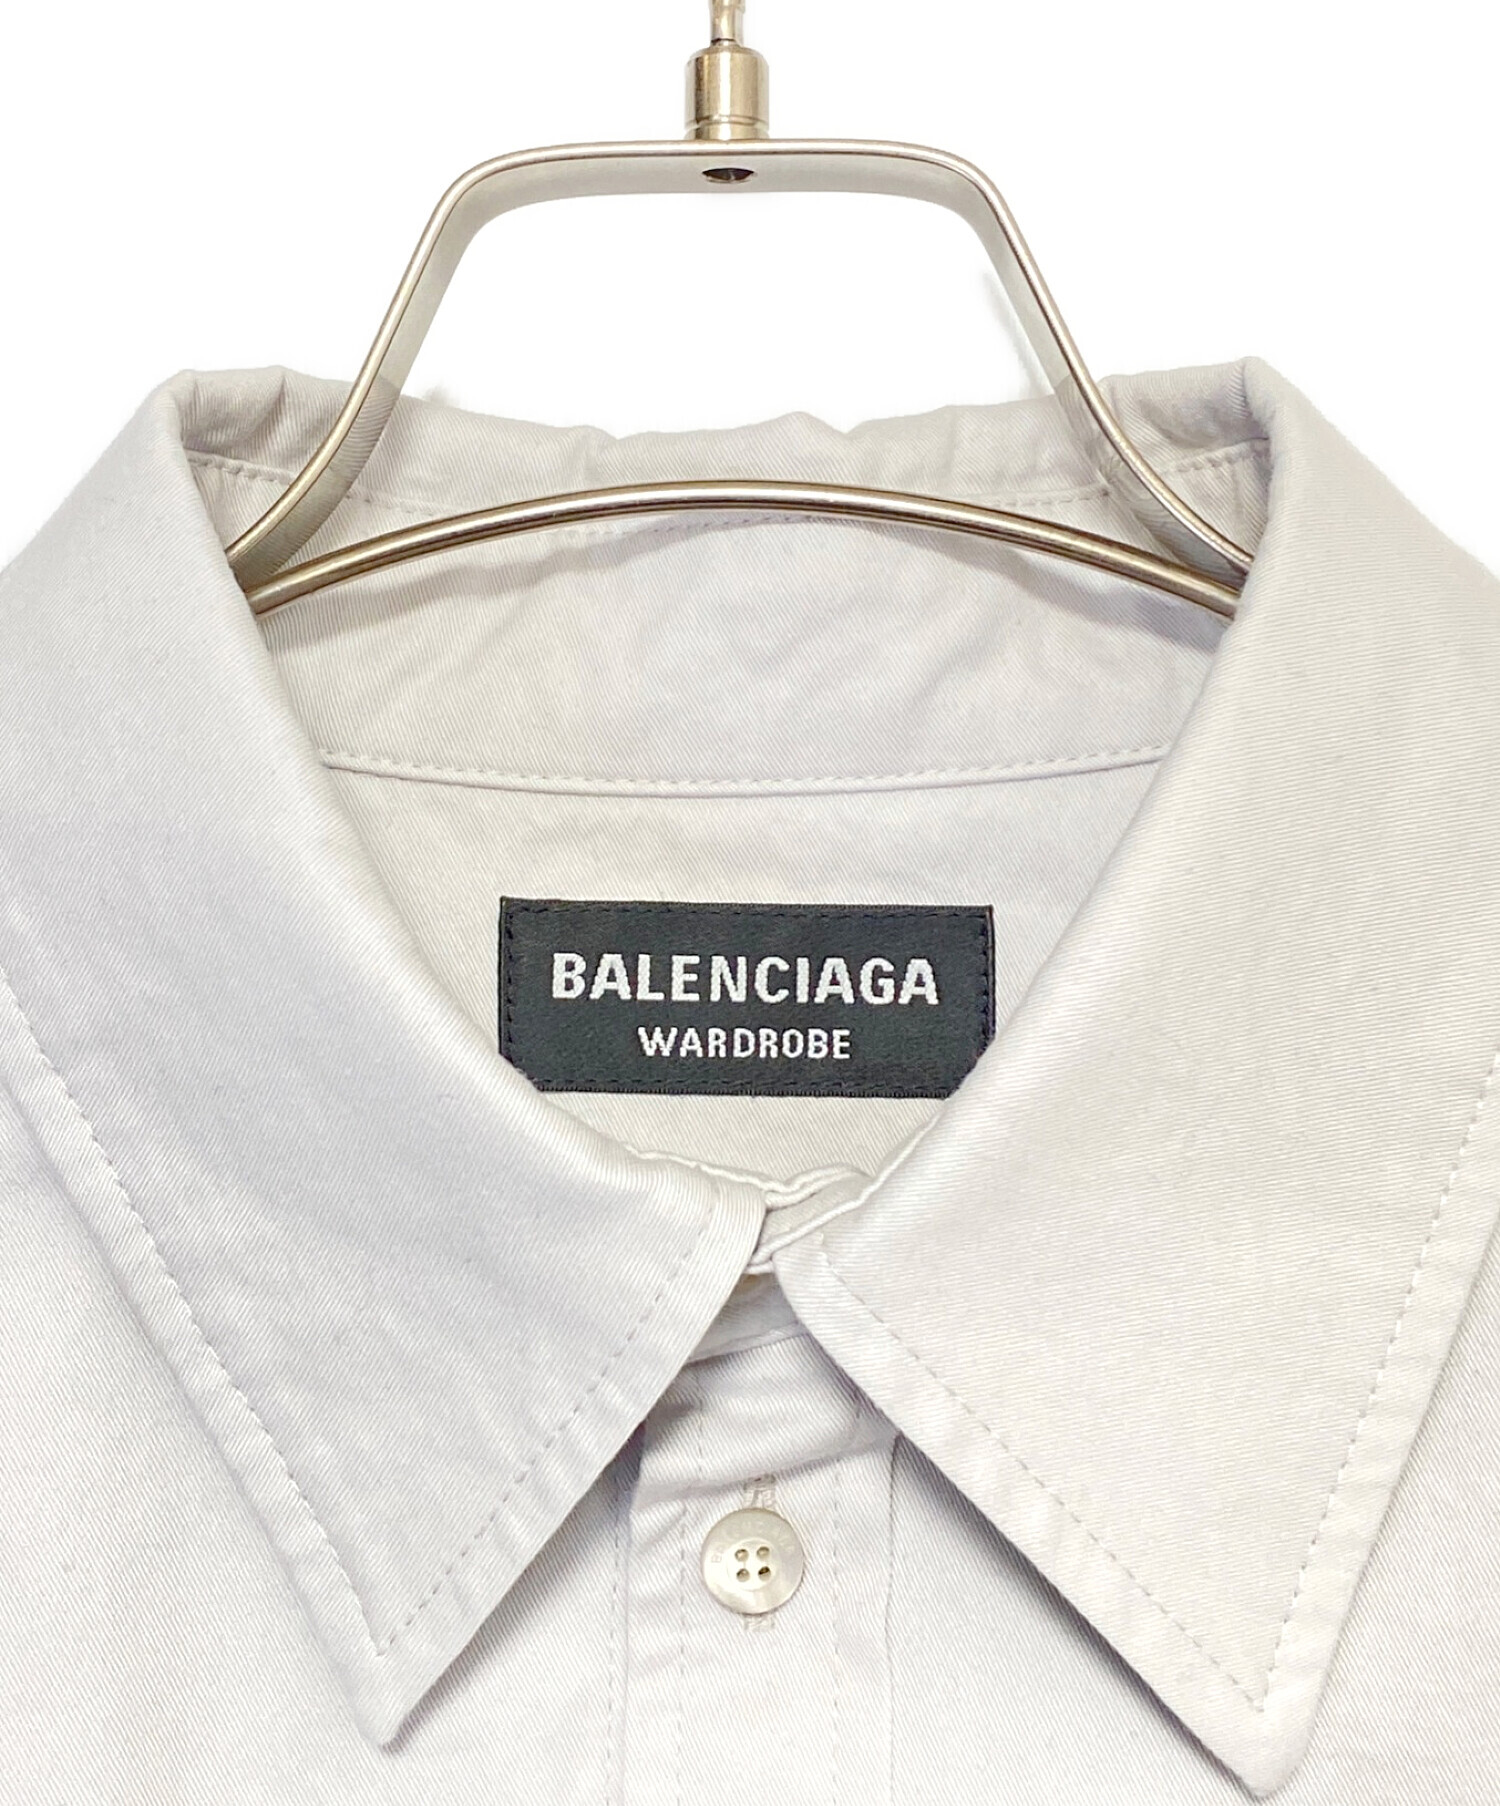 BALENCIAGA バレンシアガ 長袖シャツ オーバーサイズ ストライプ ビッグサイズ オープンカラー サテン風 38 608943TG0221070 ブラック 黒 ホワイト 白    メンズ 人気 美品【品】